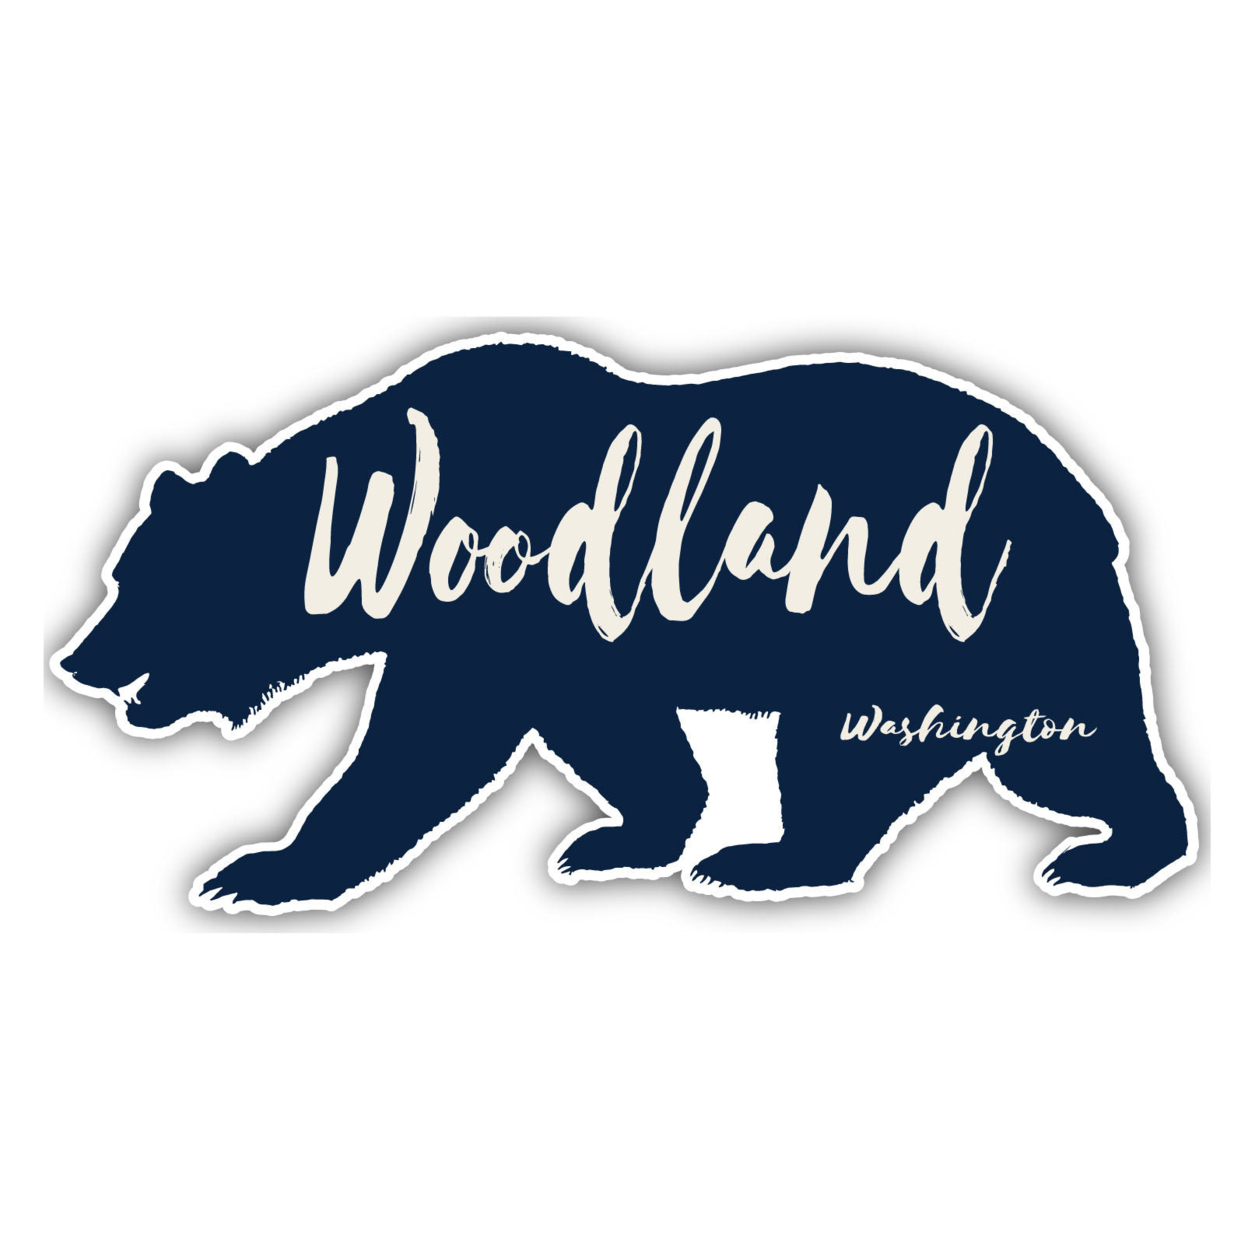 Woodland Washington Souvenir Decorative Stickers (Choose Theme And Size) - Single Unit, 4-Inch, Bear